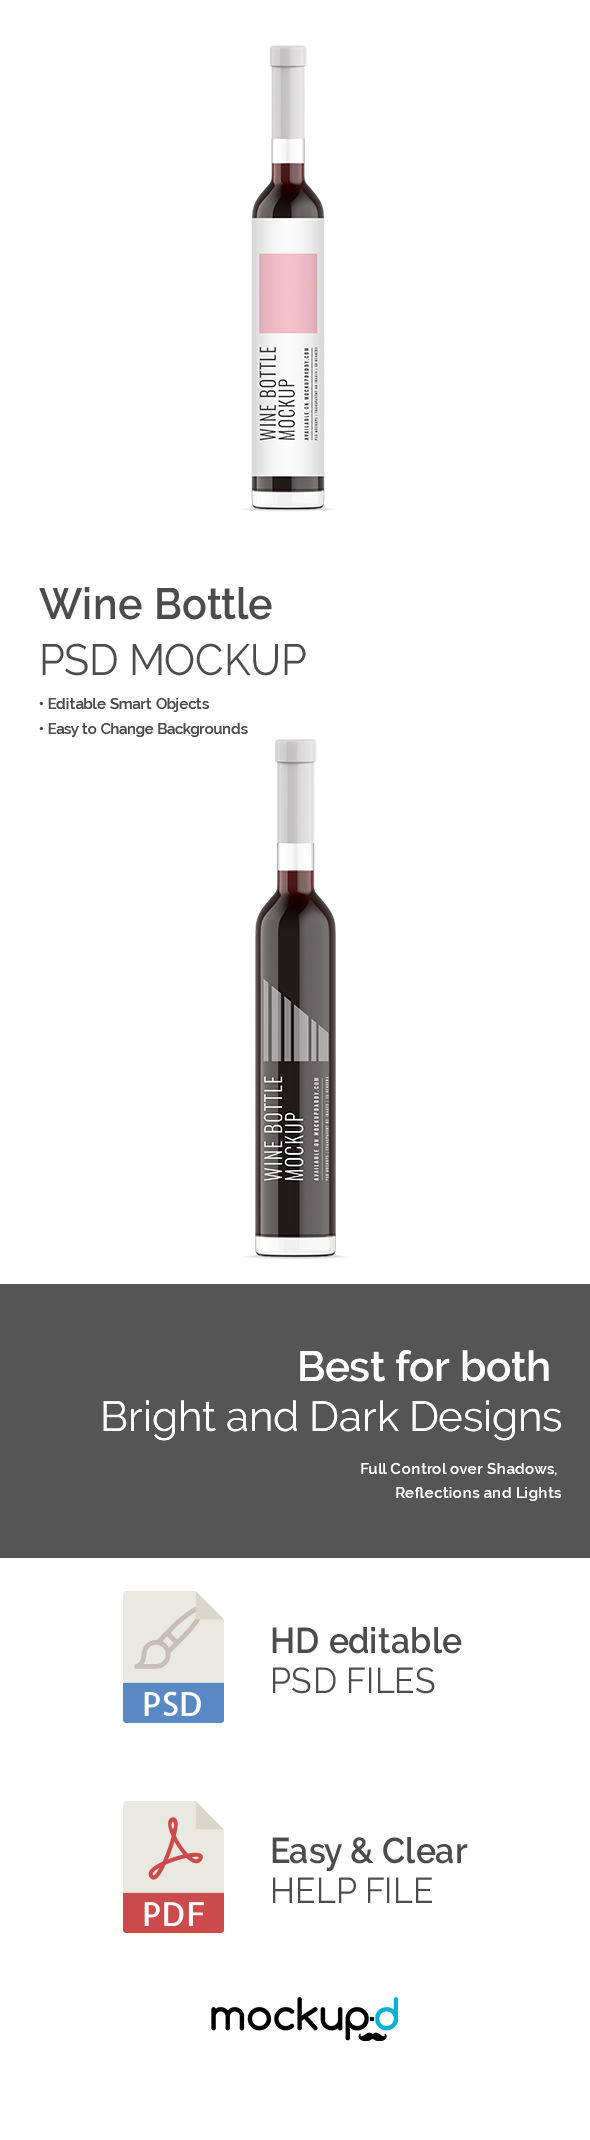 Premium Wine Bottle Psd Mockup Featured